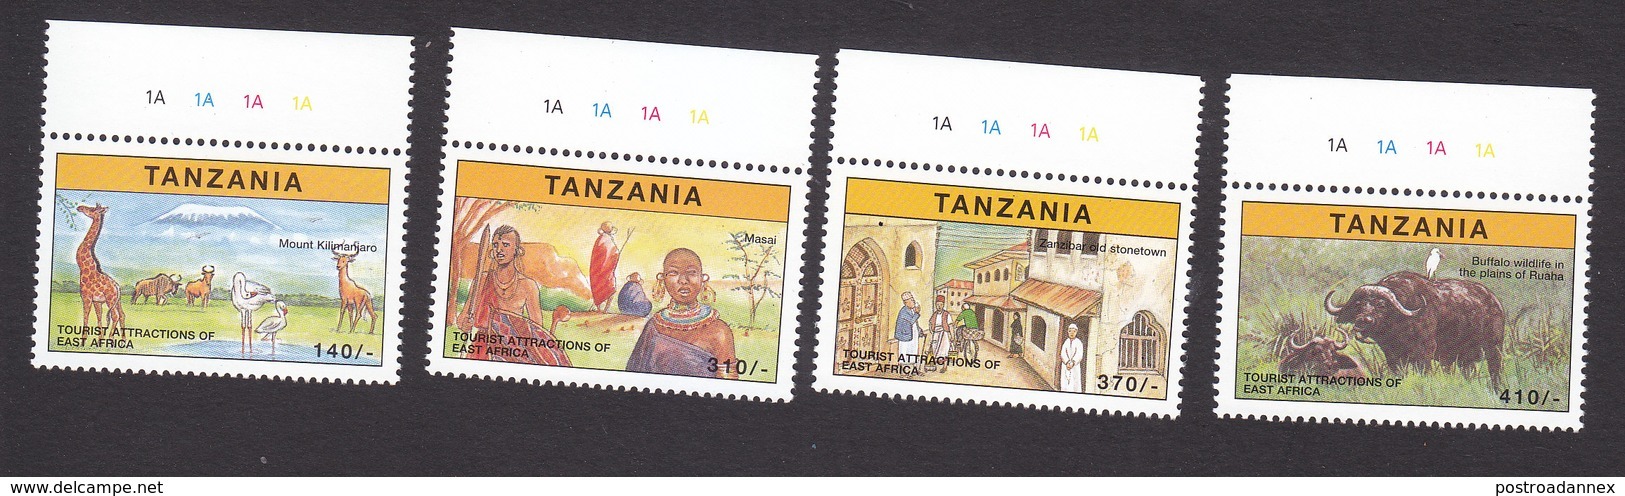 Tanzania, Scott #1613-1616, Mint Never Hinged, Tourist Attractions, Issued 1997 - Tanzania (1964-...)